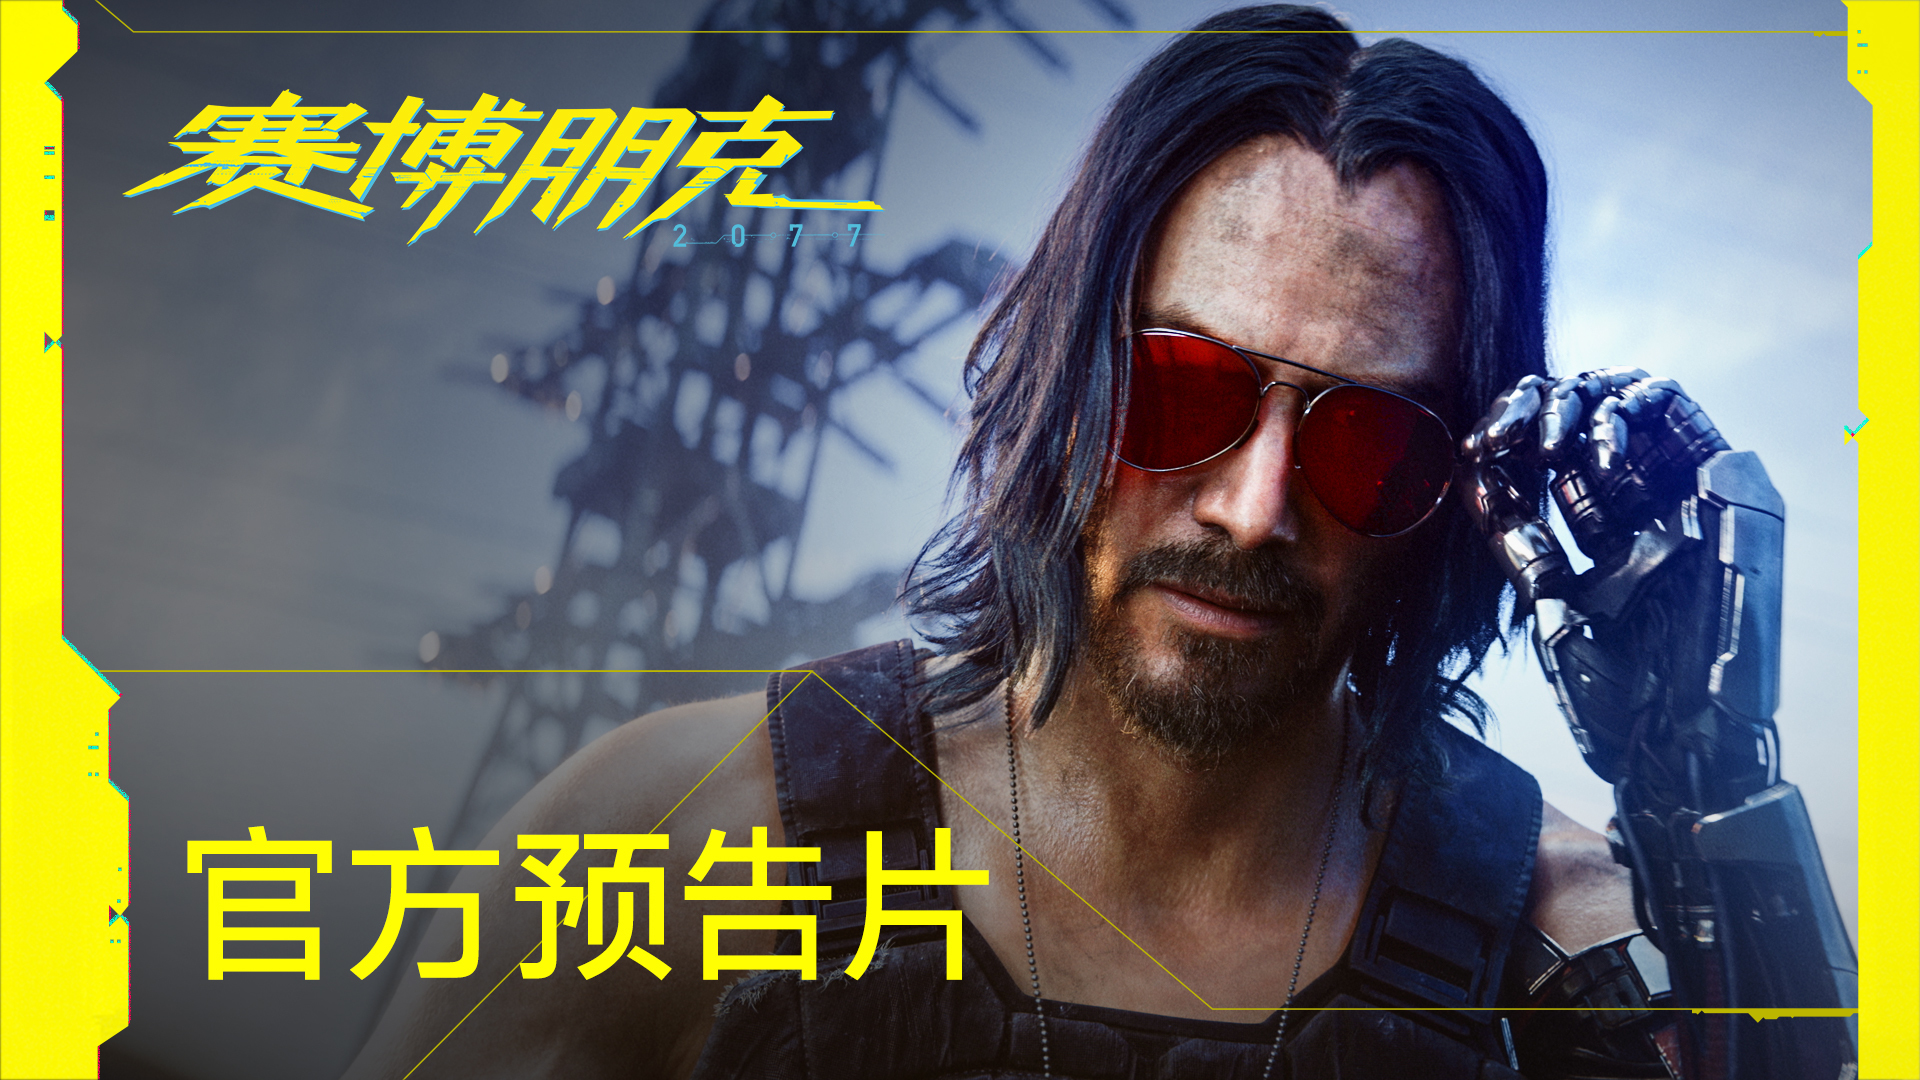 E3：《赛博朋克2077》2020年4月16日发售 支持简体中文